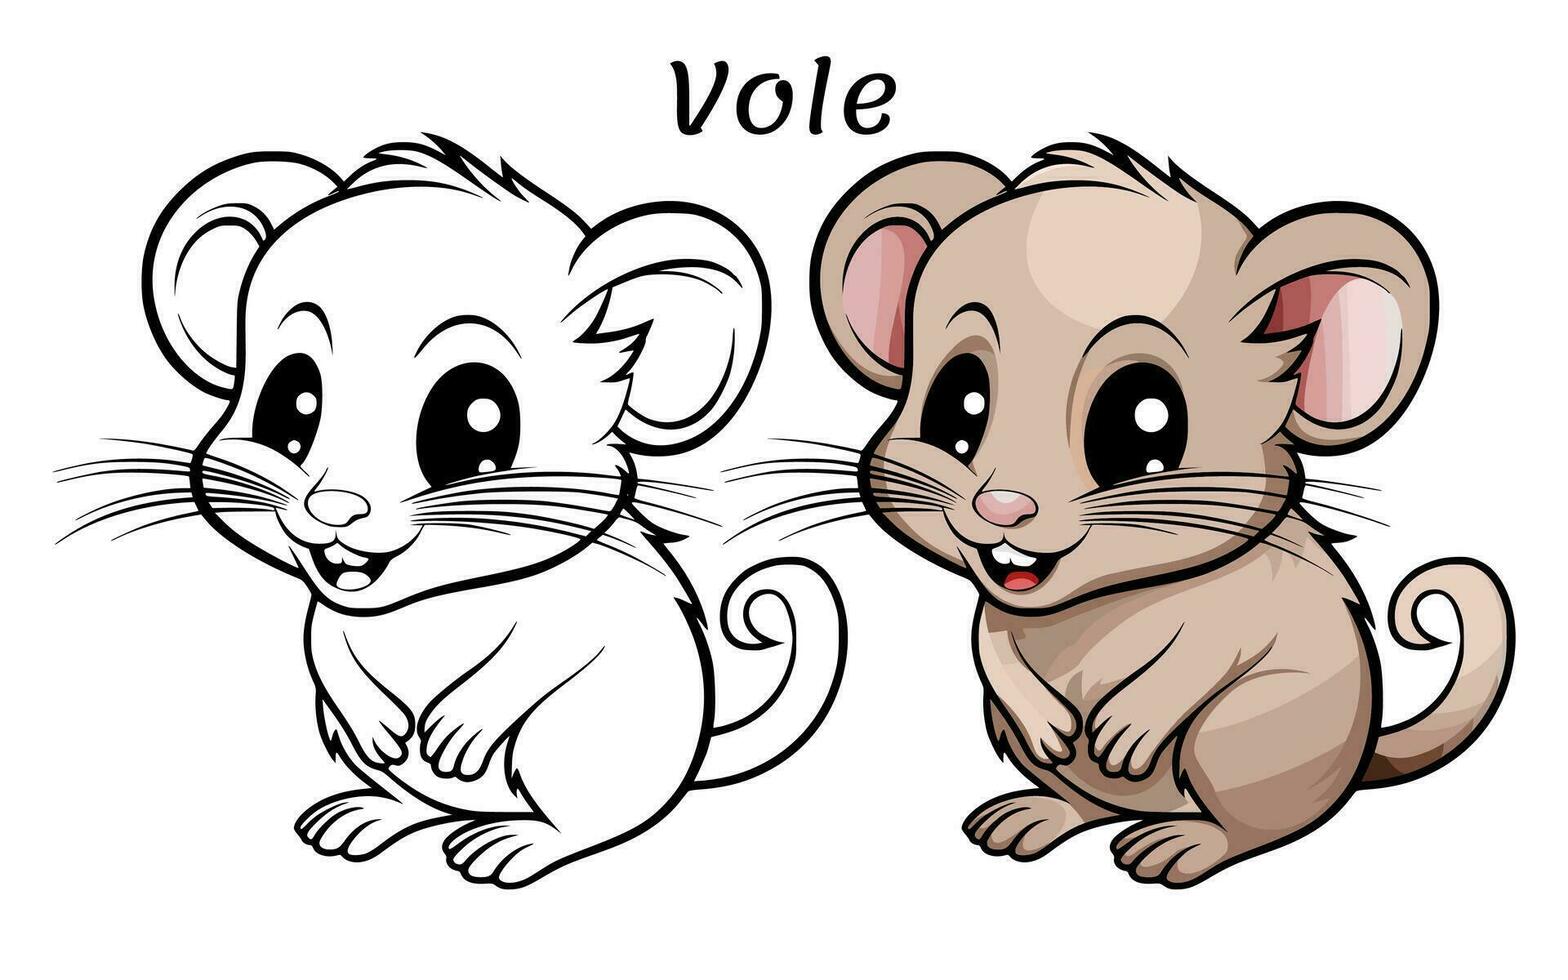 Vole cute animal coloring book illustration vector